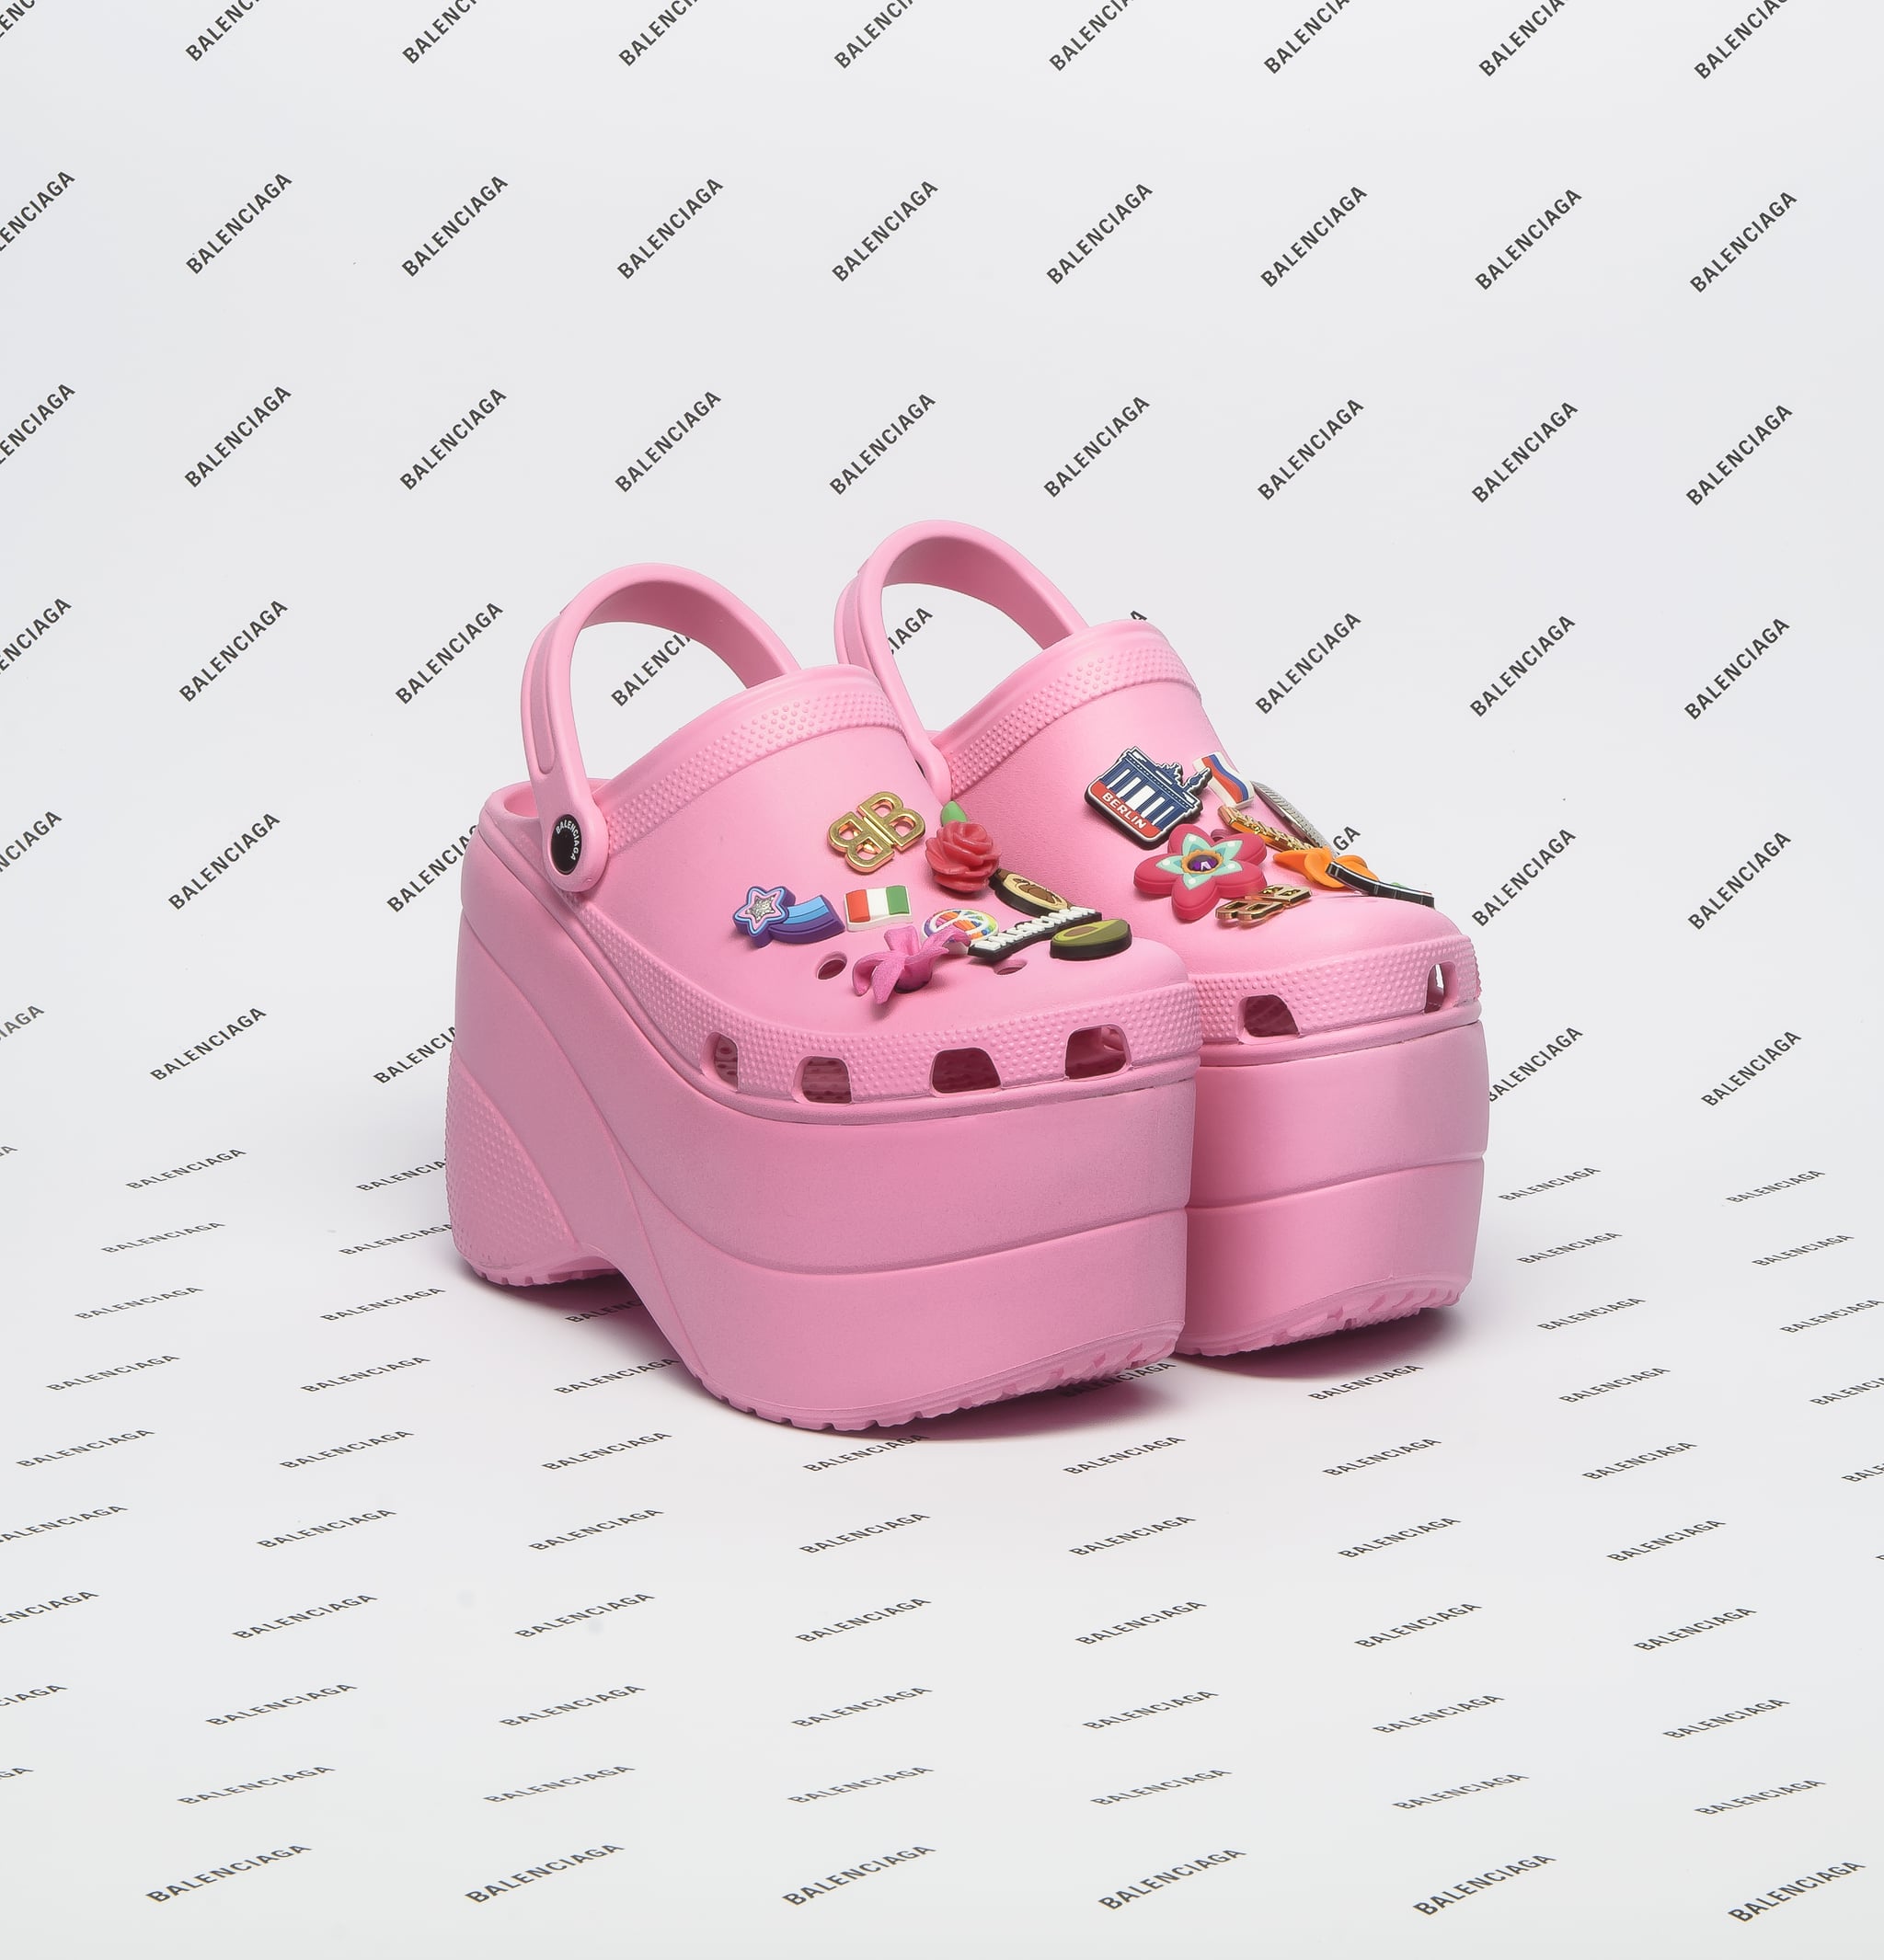 crocs women's platform shoes